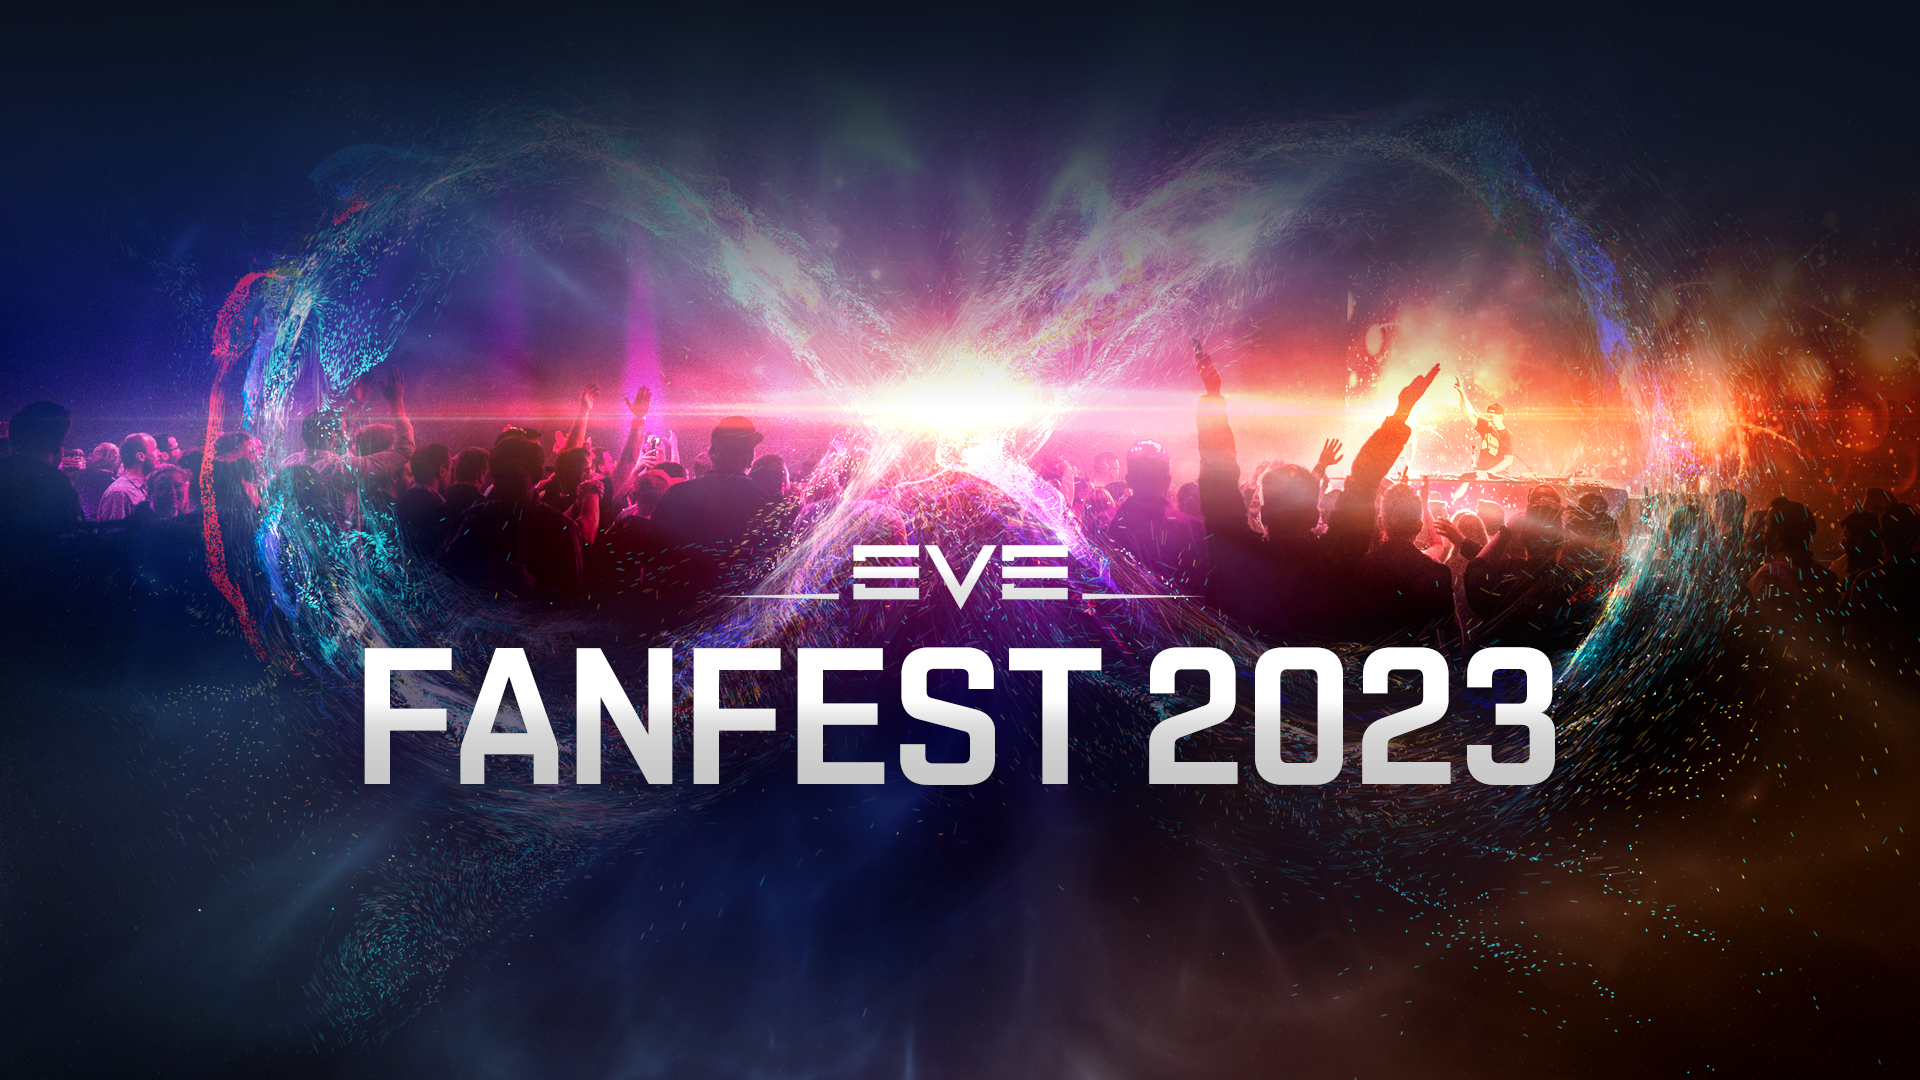 Fanfest 2023 - February announcement 1920x1080